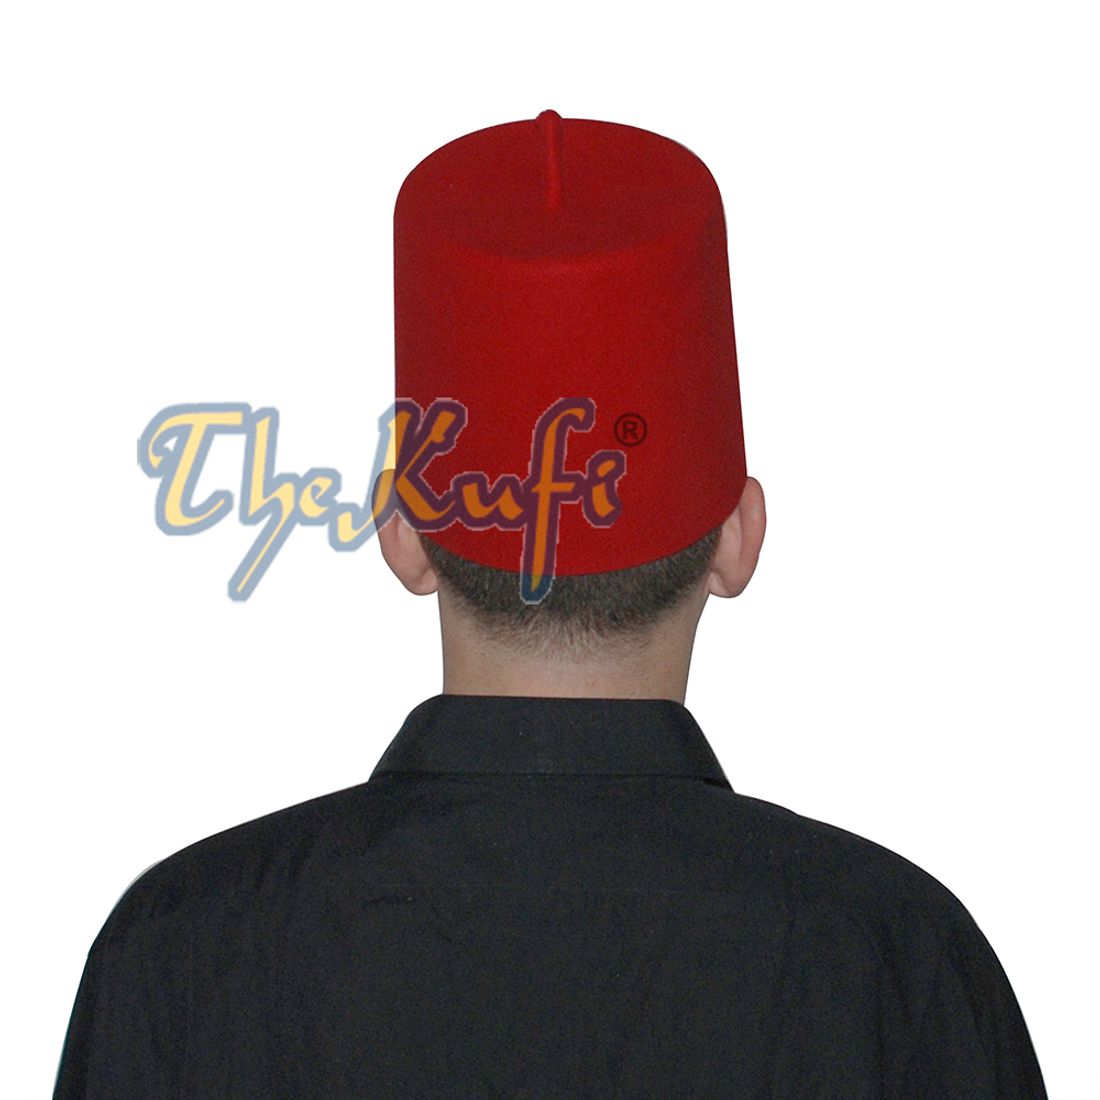 Tradisi Fez Merah Tinggi Dirasai Tarboosh Berlubang dengan Batang